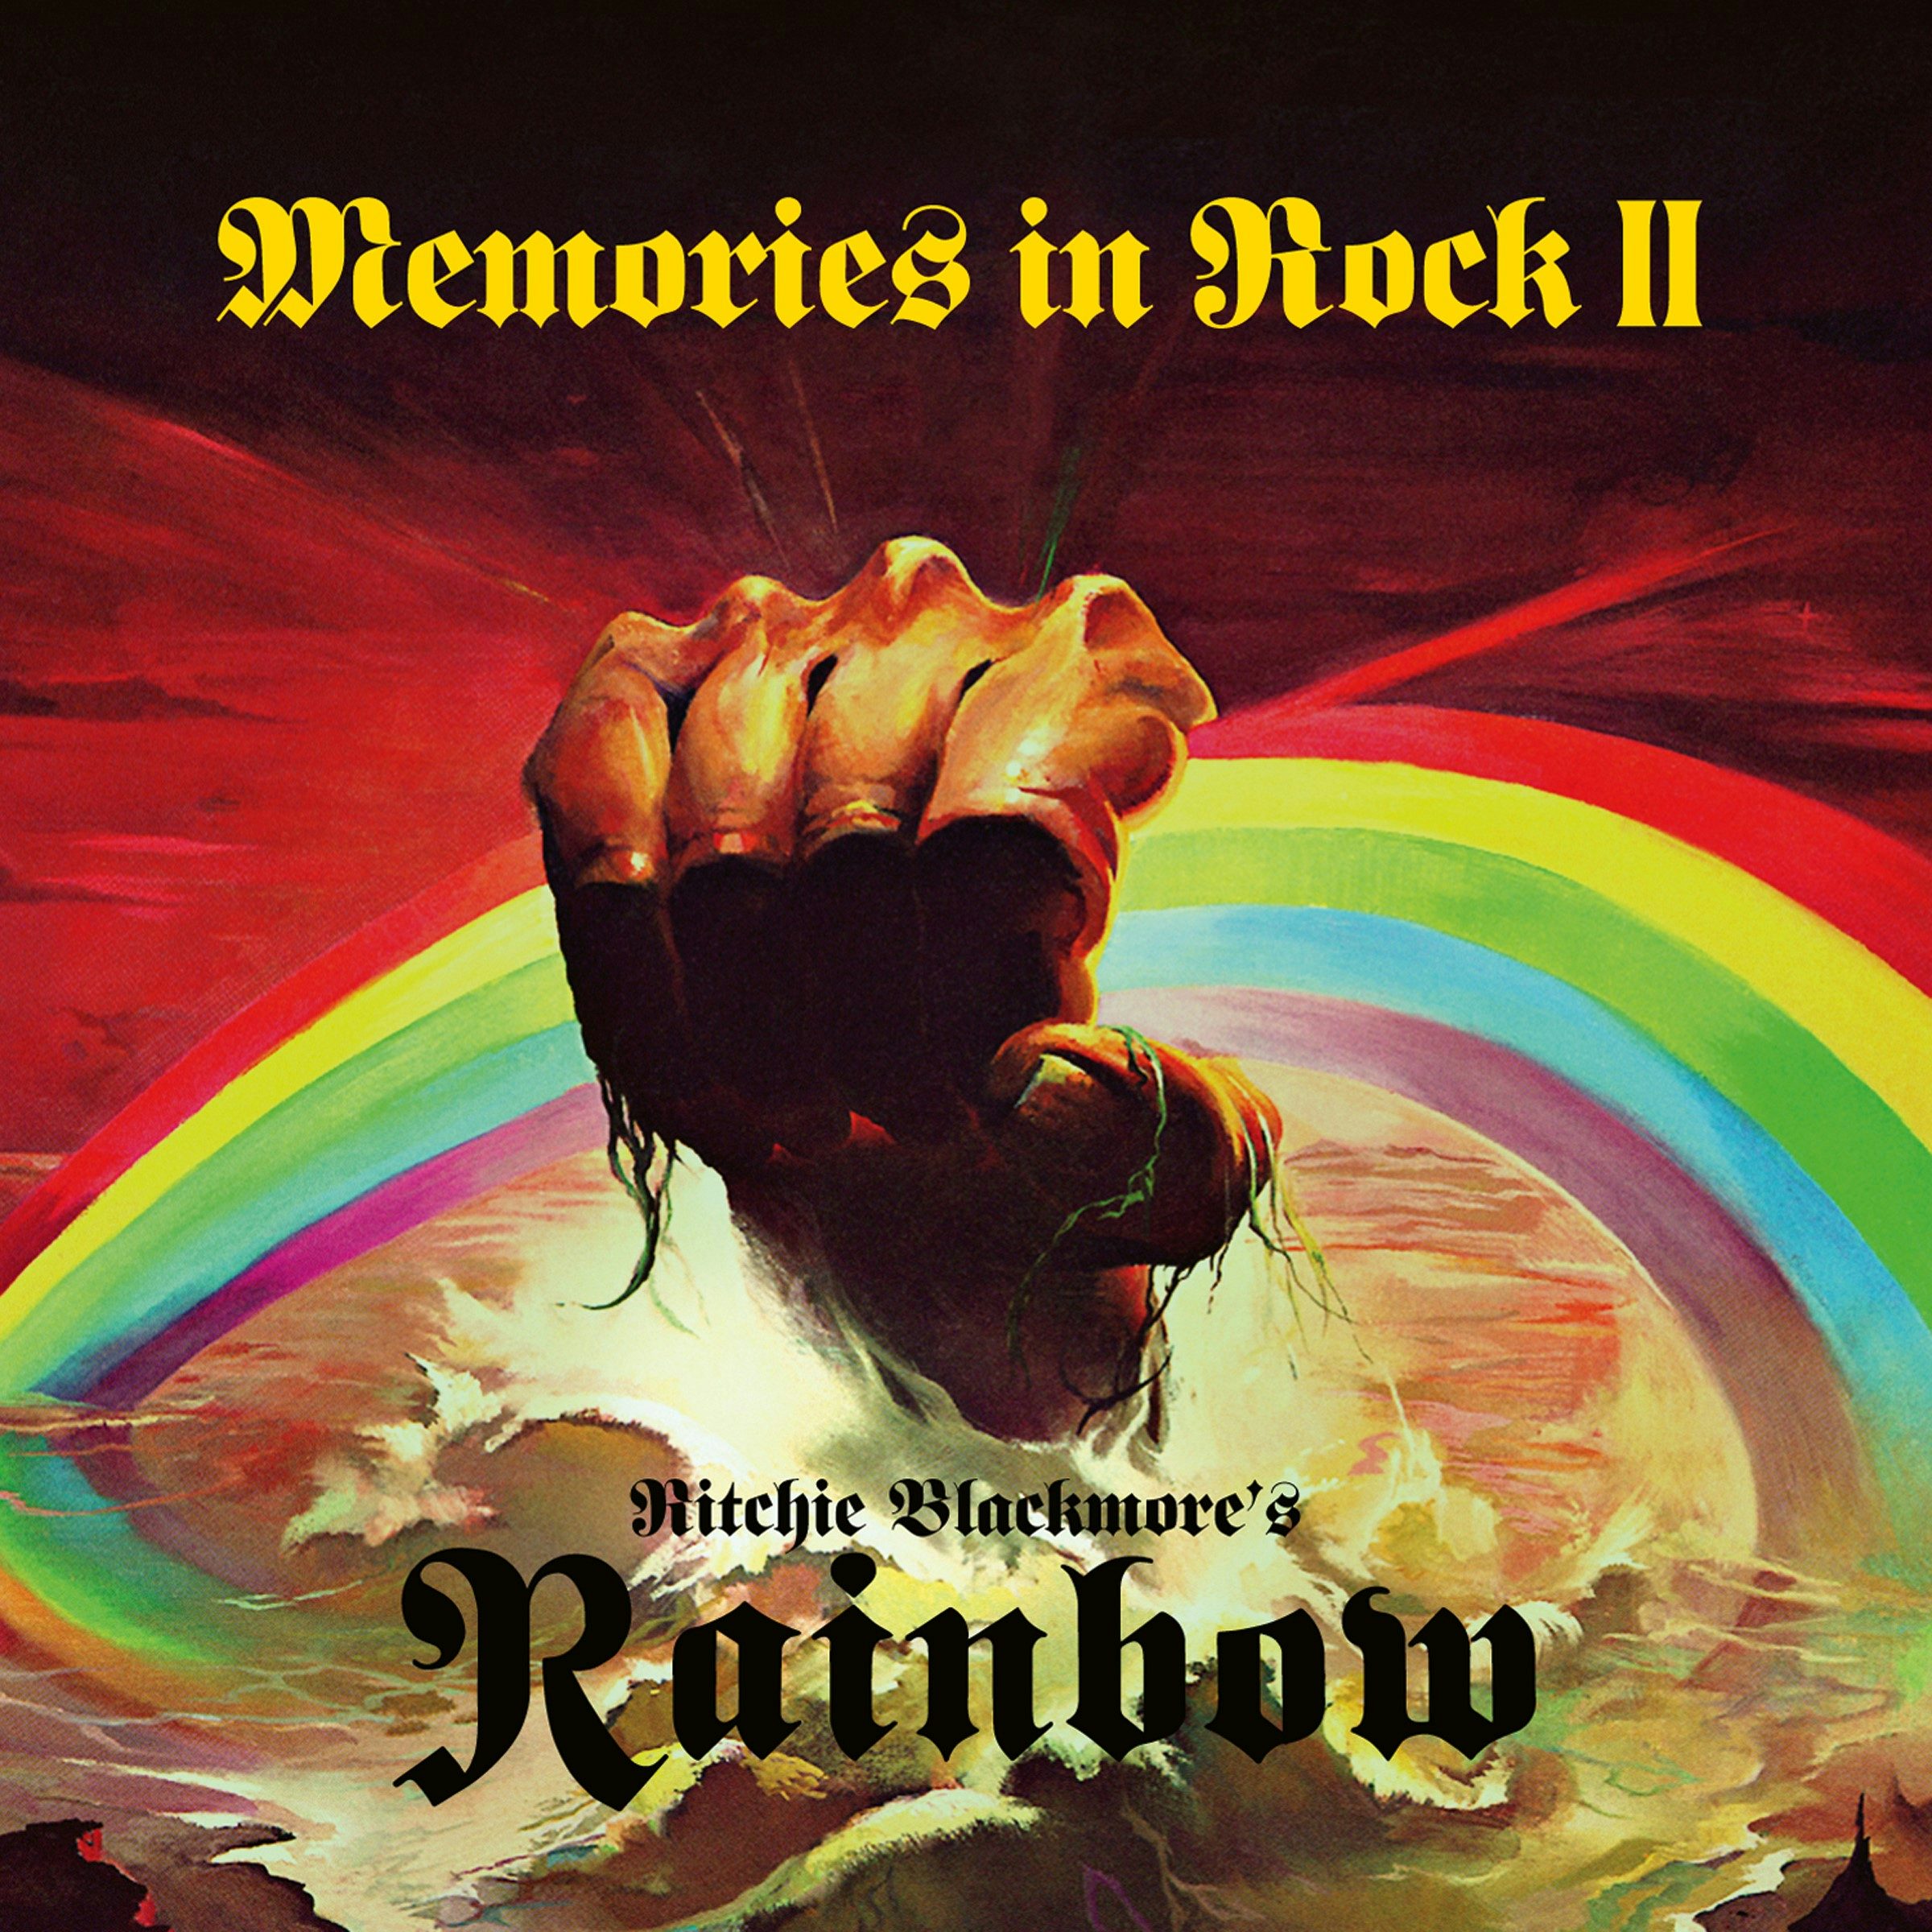 Ritchie Blackmore's Rainbow MEMORIES IN ROCK II Vinyl Record